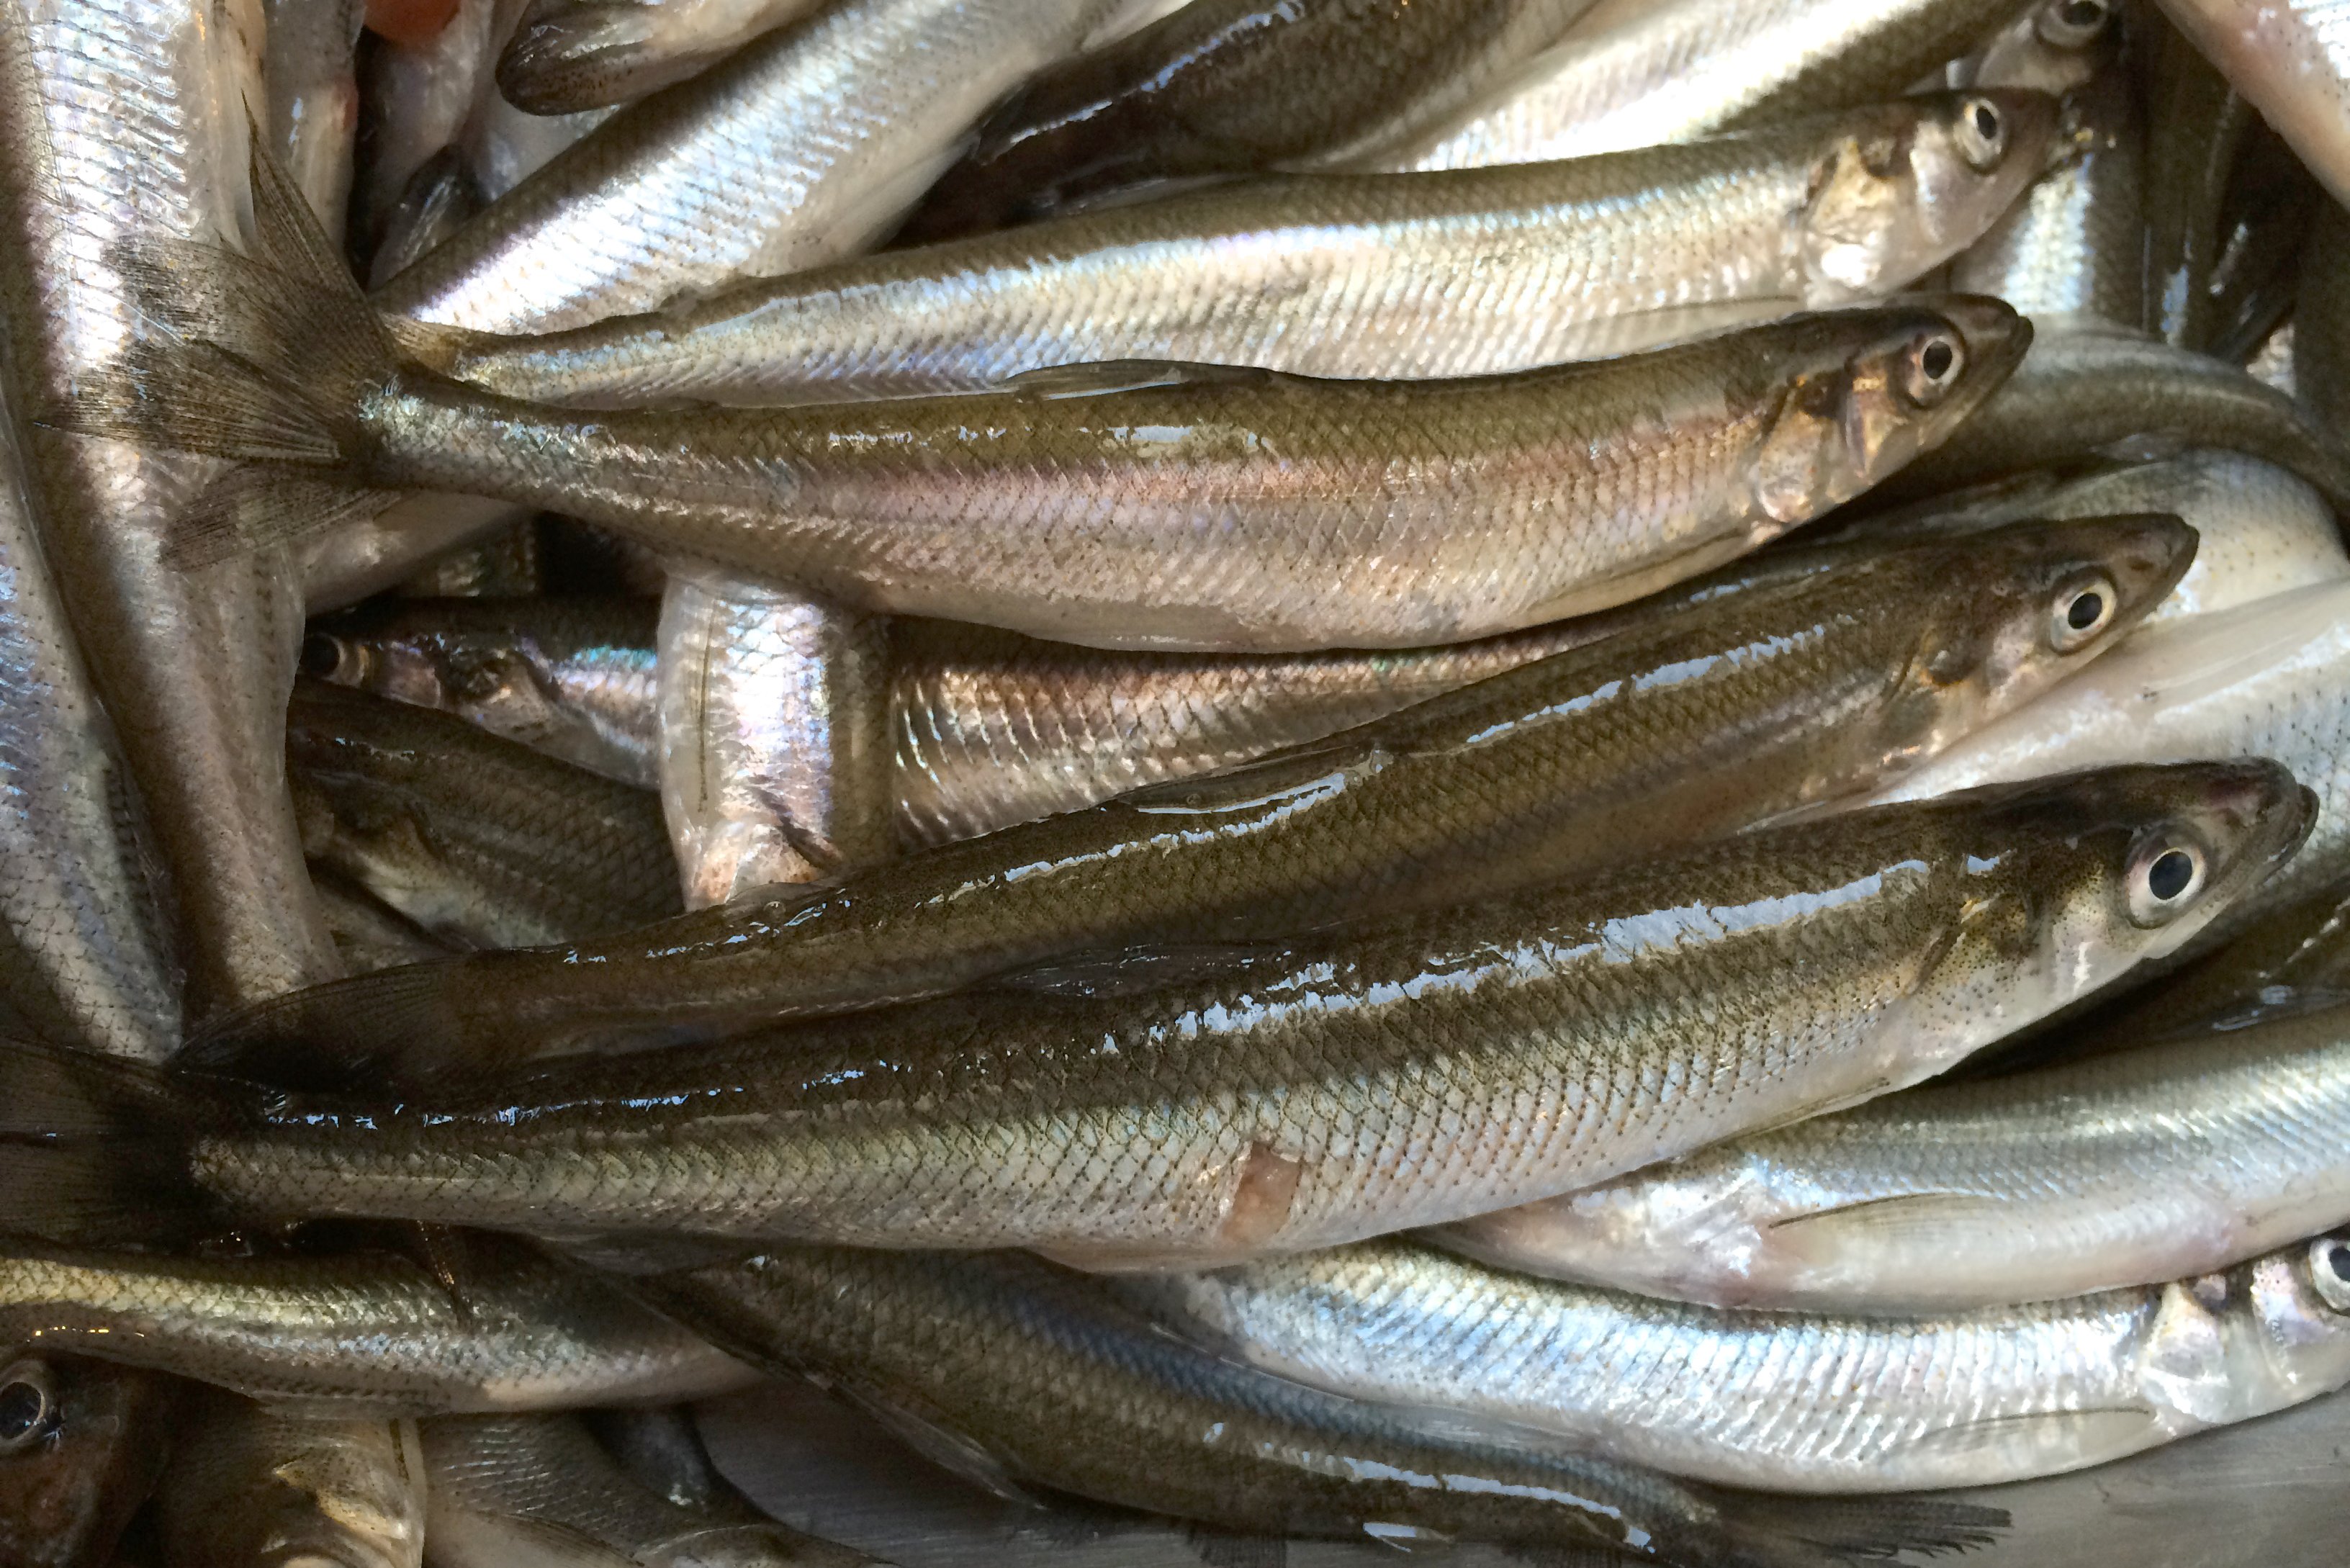 New fish advisories warn of PFAS in Lake Michigan and Huron smelt 